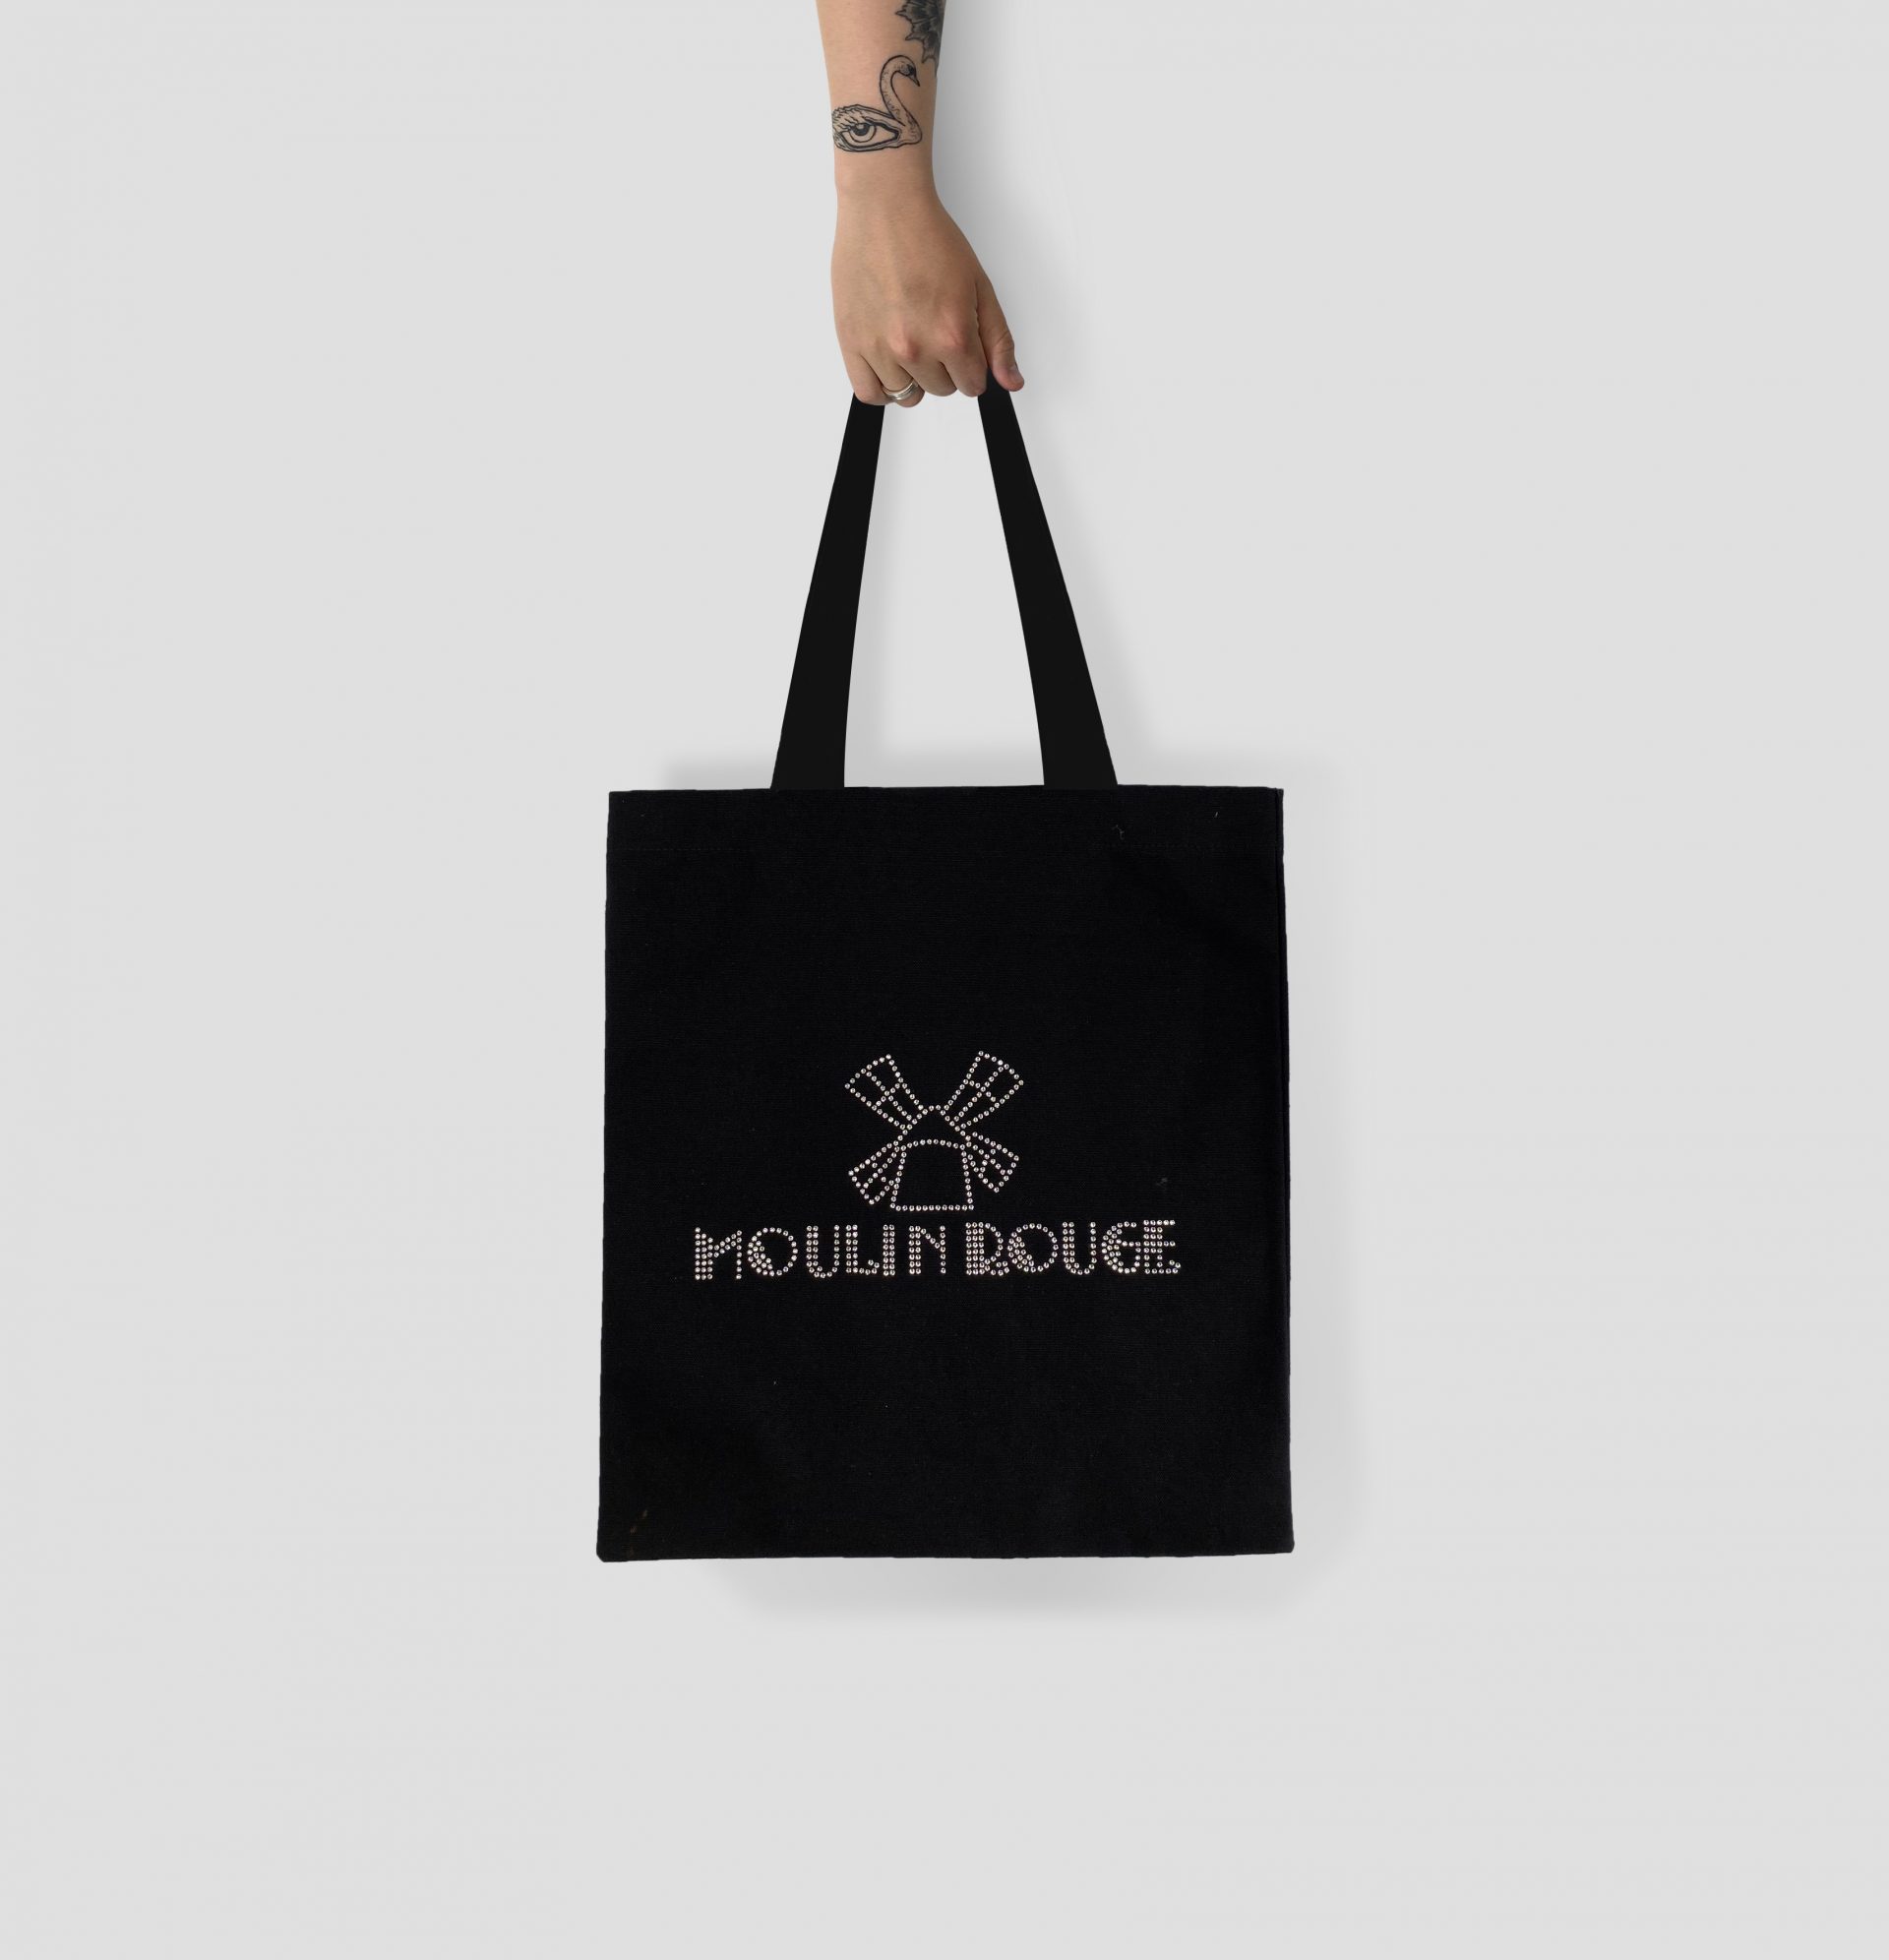 Swarovski® Moulin Rouge Printed tote Bag Lead image